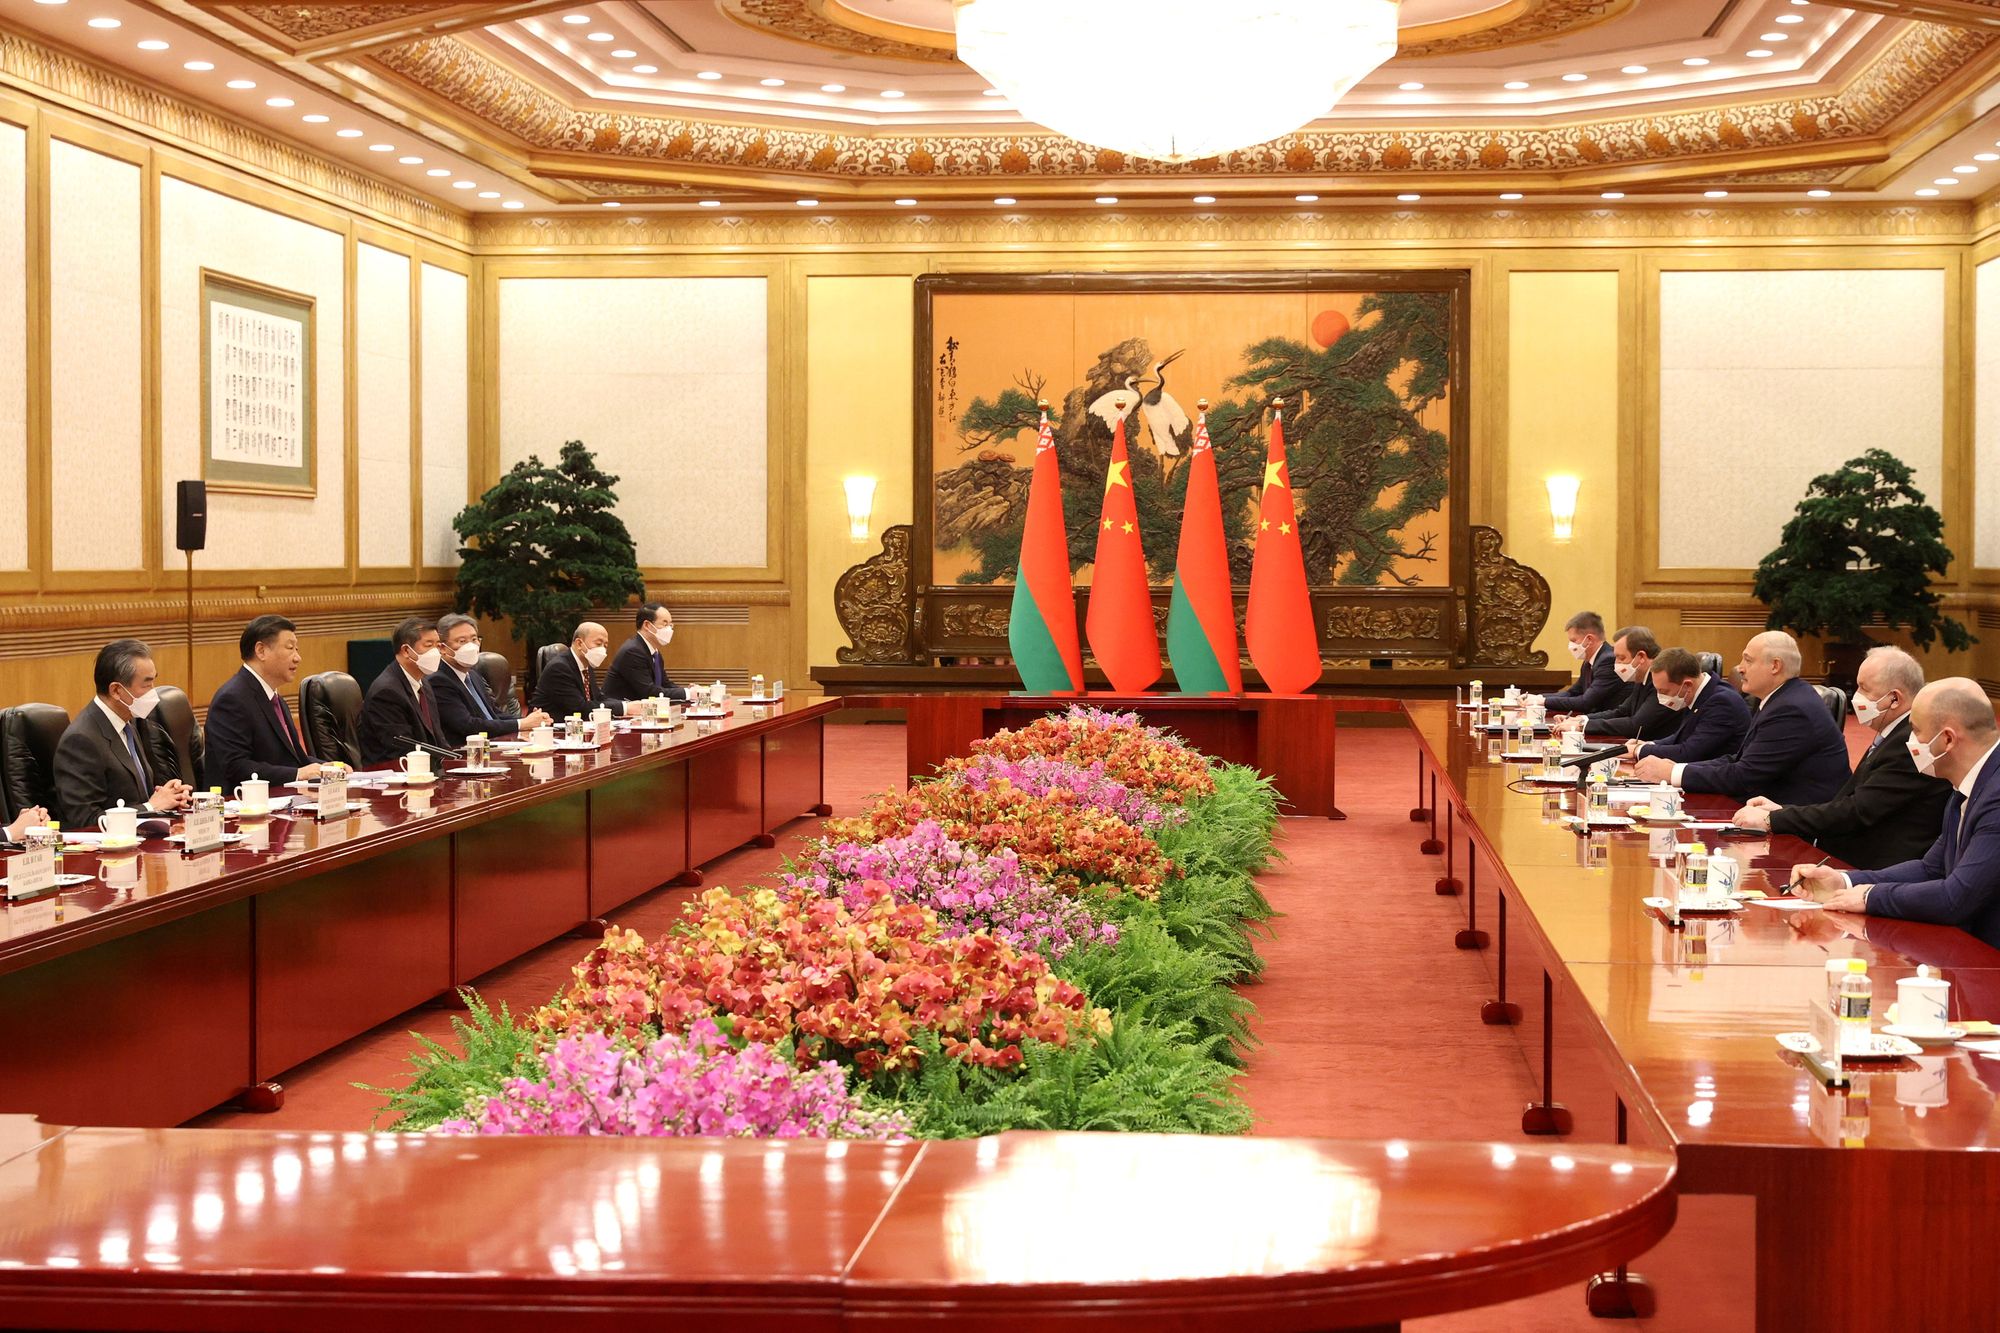 Belarusian President Alexander Lukashenko attends a meeting in Beijing, China